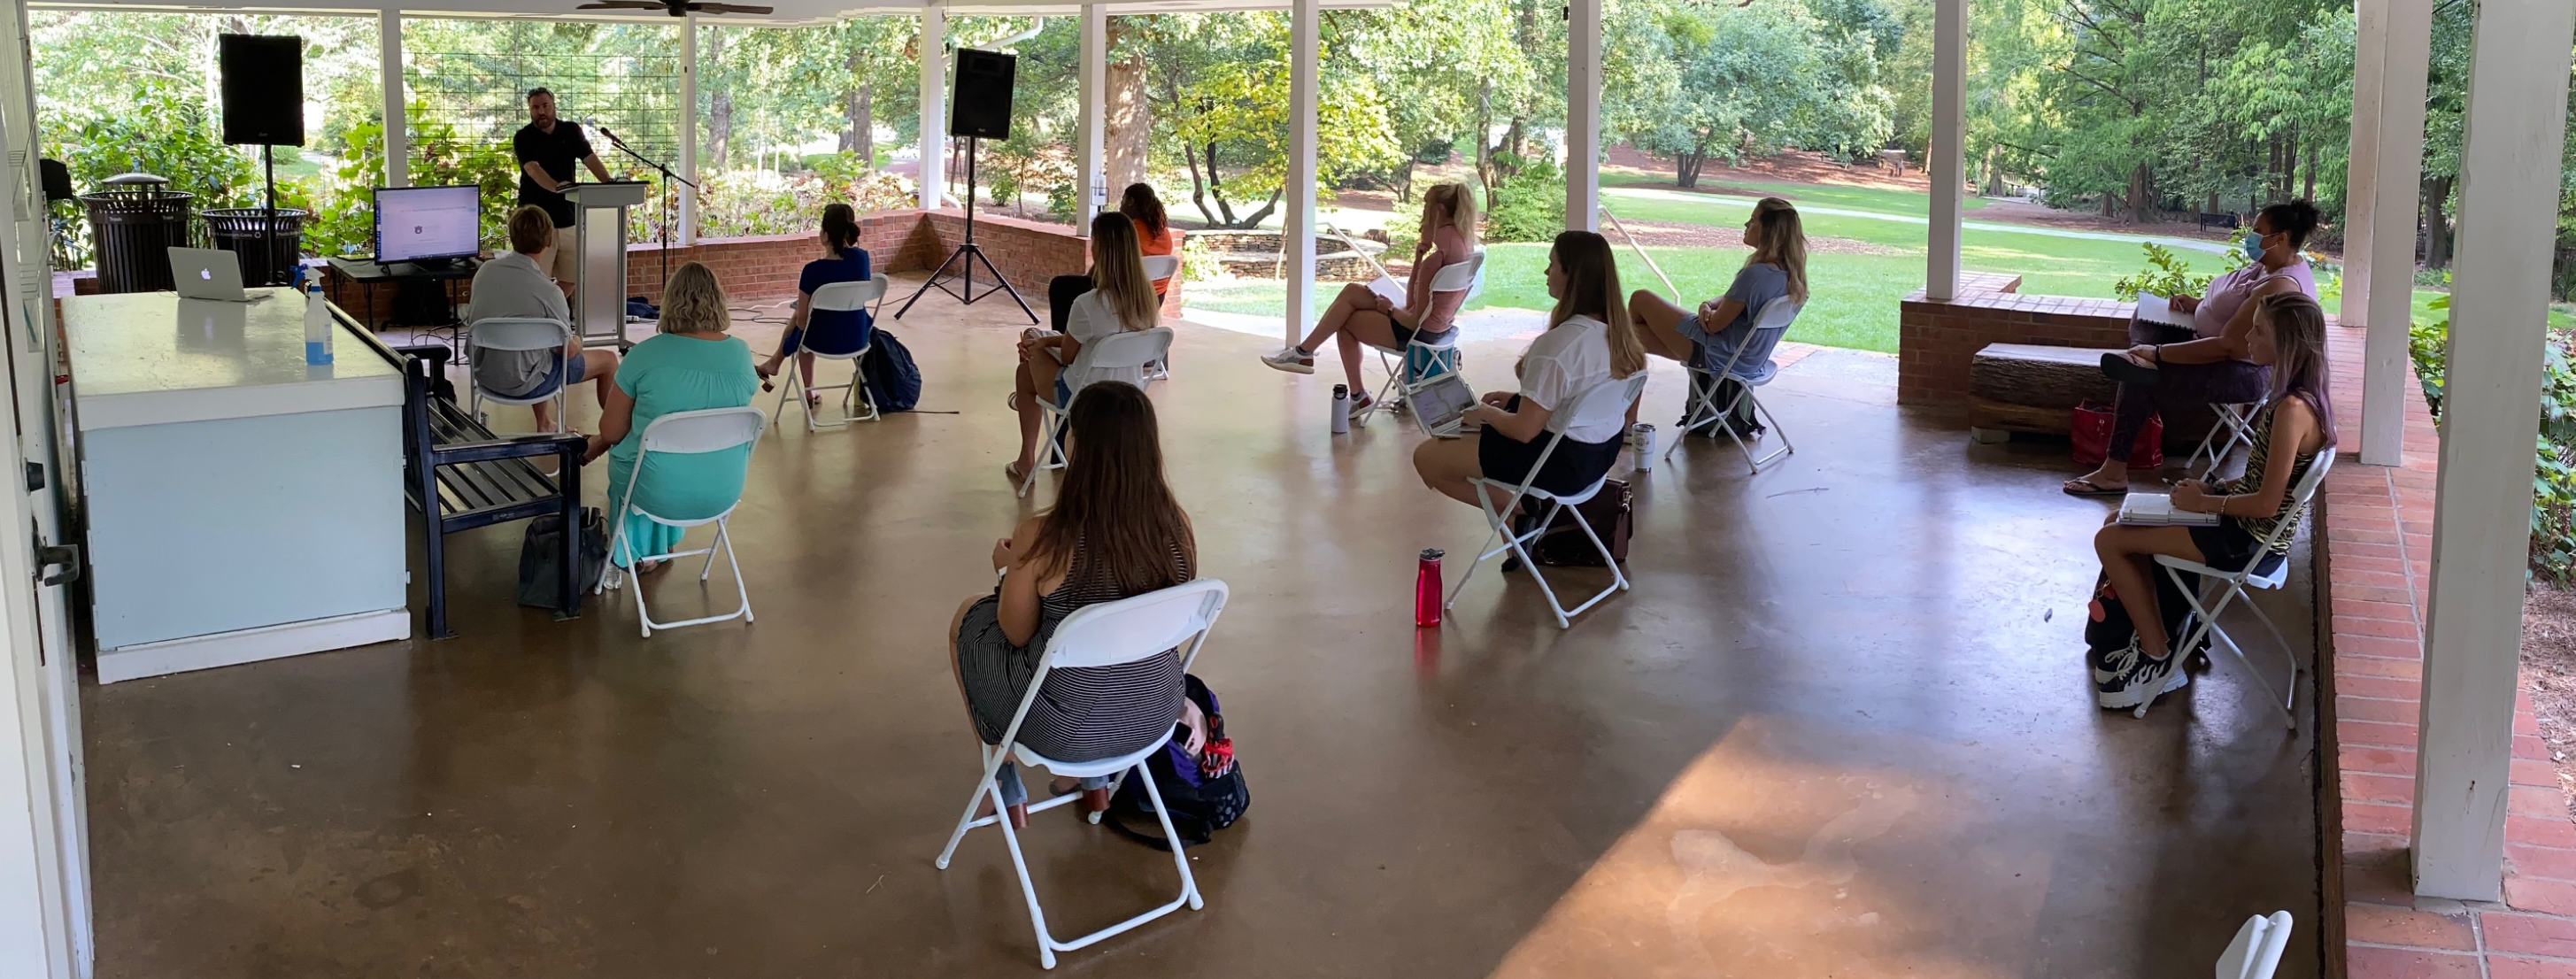 Auburn’s arboretum helps faculty hold outdoor classes